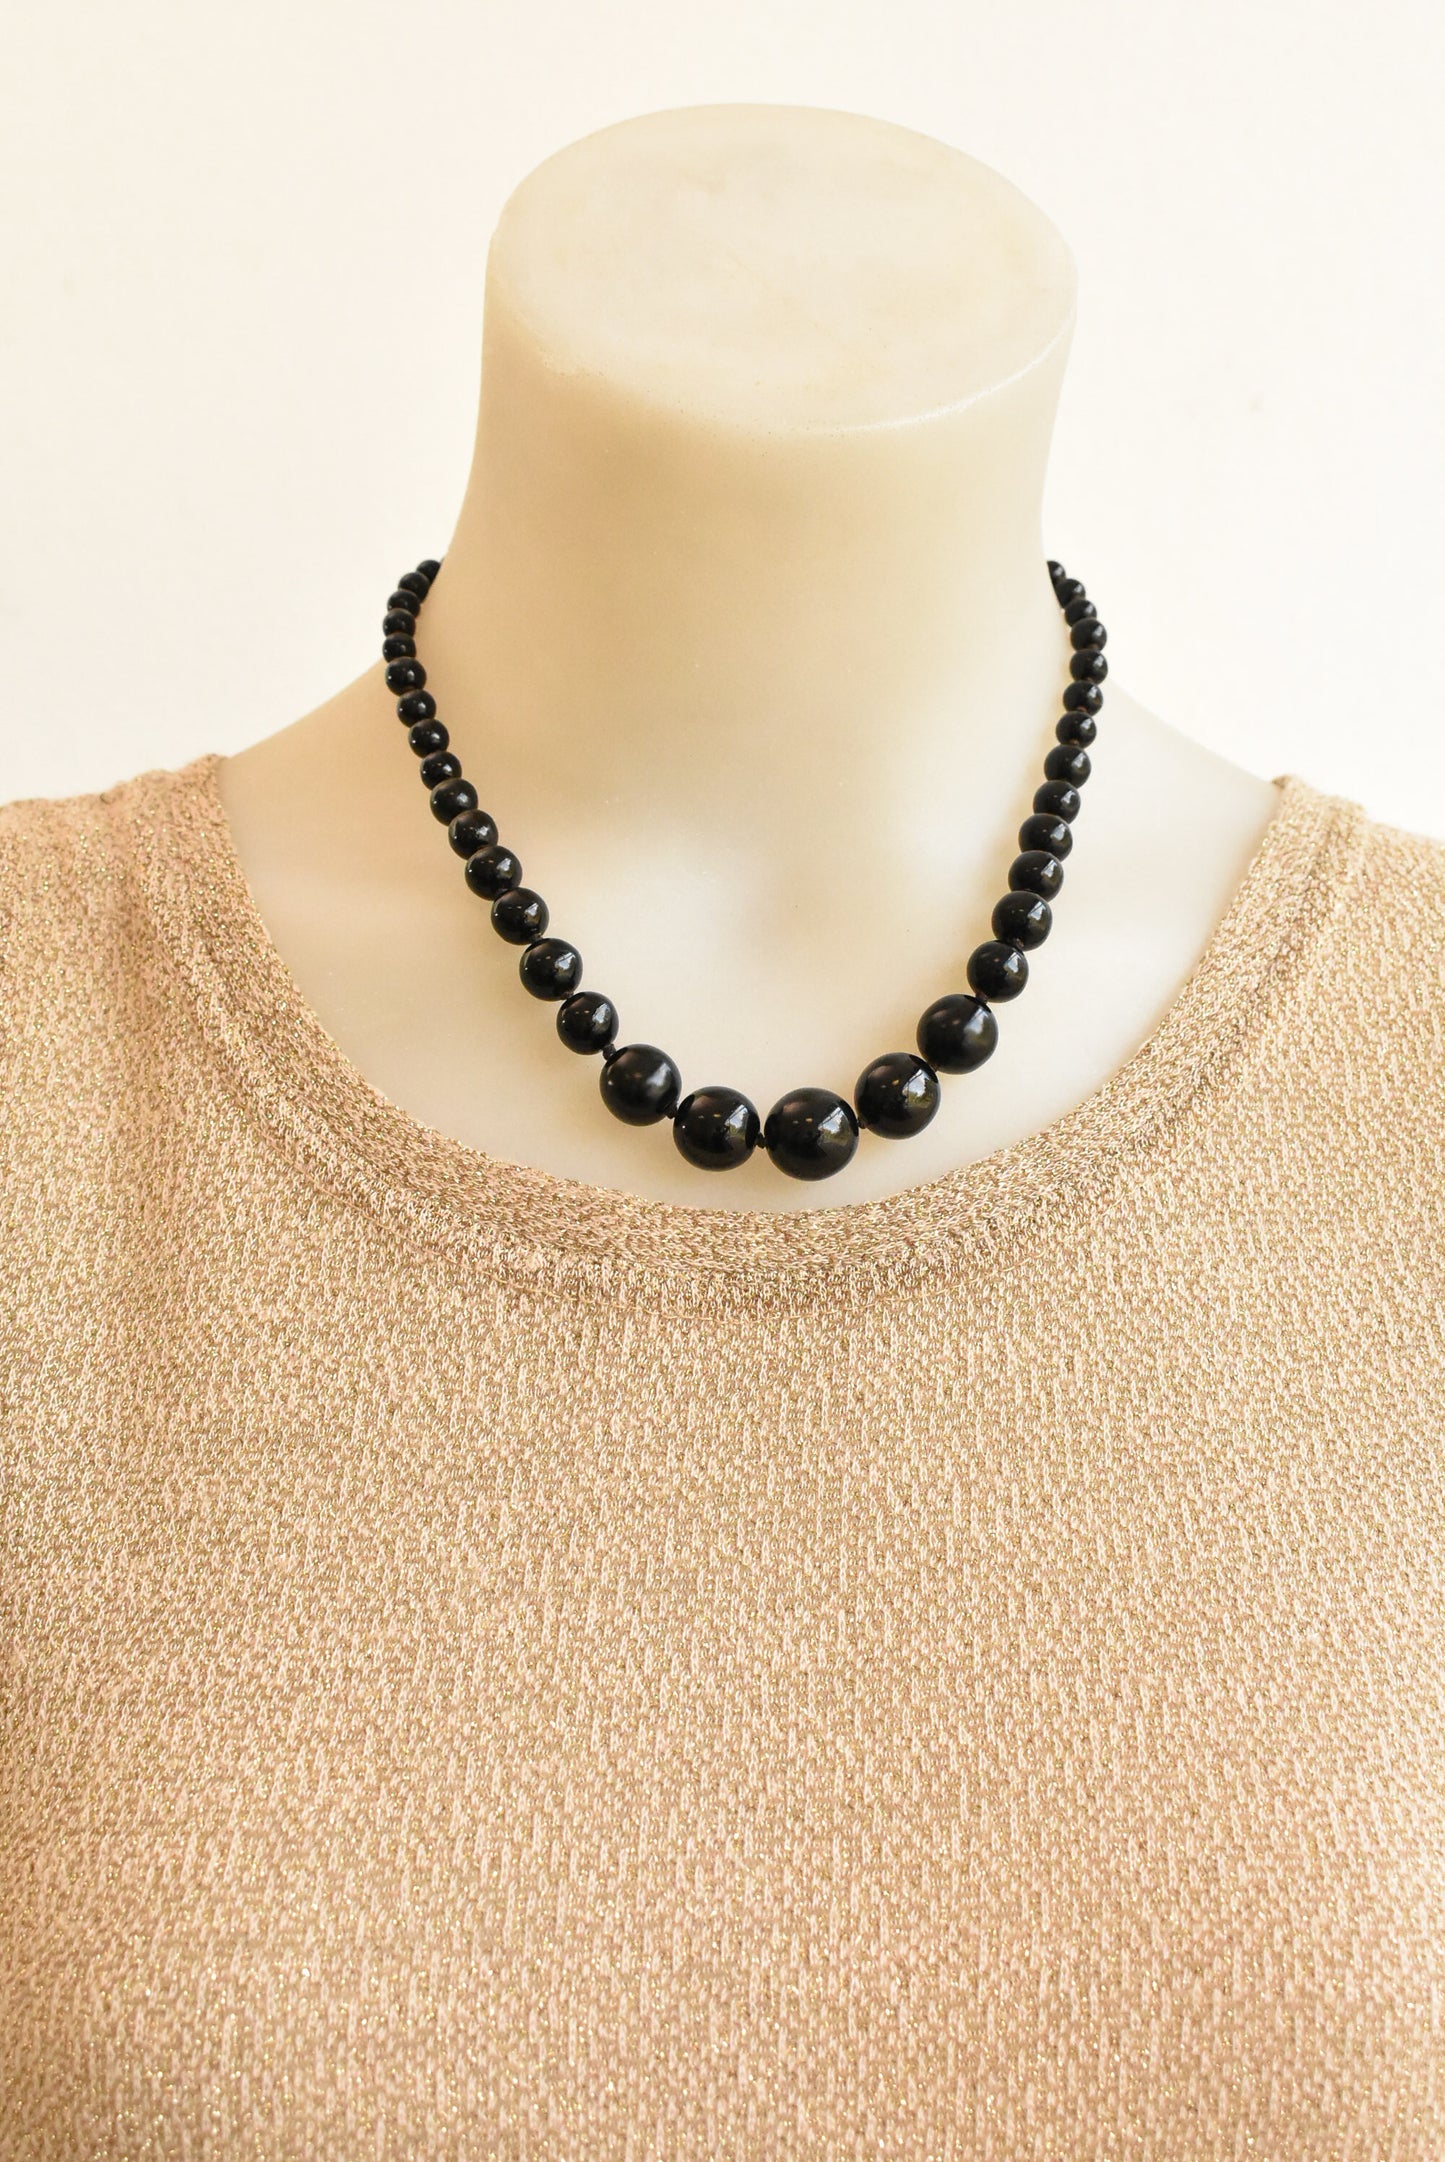 Vintage black glass bead necklace